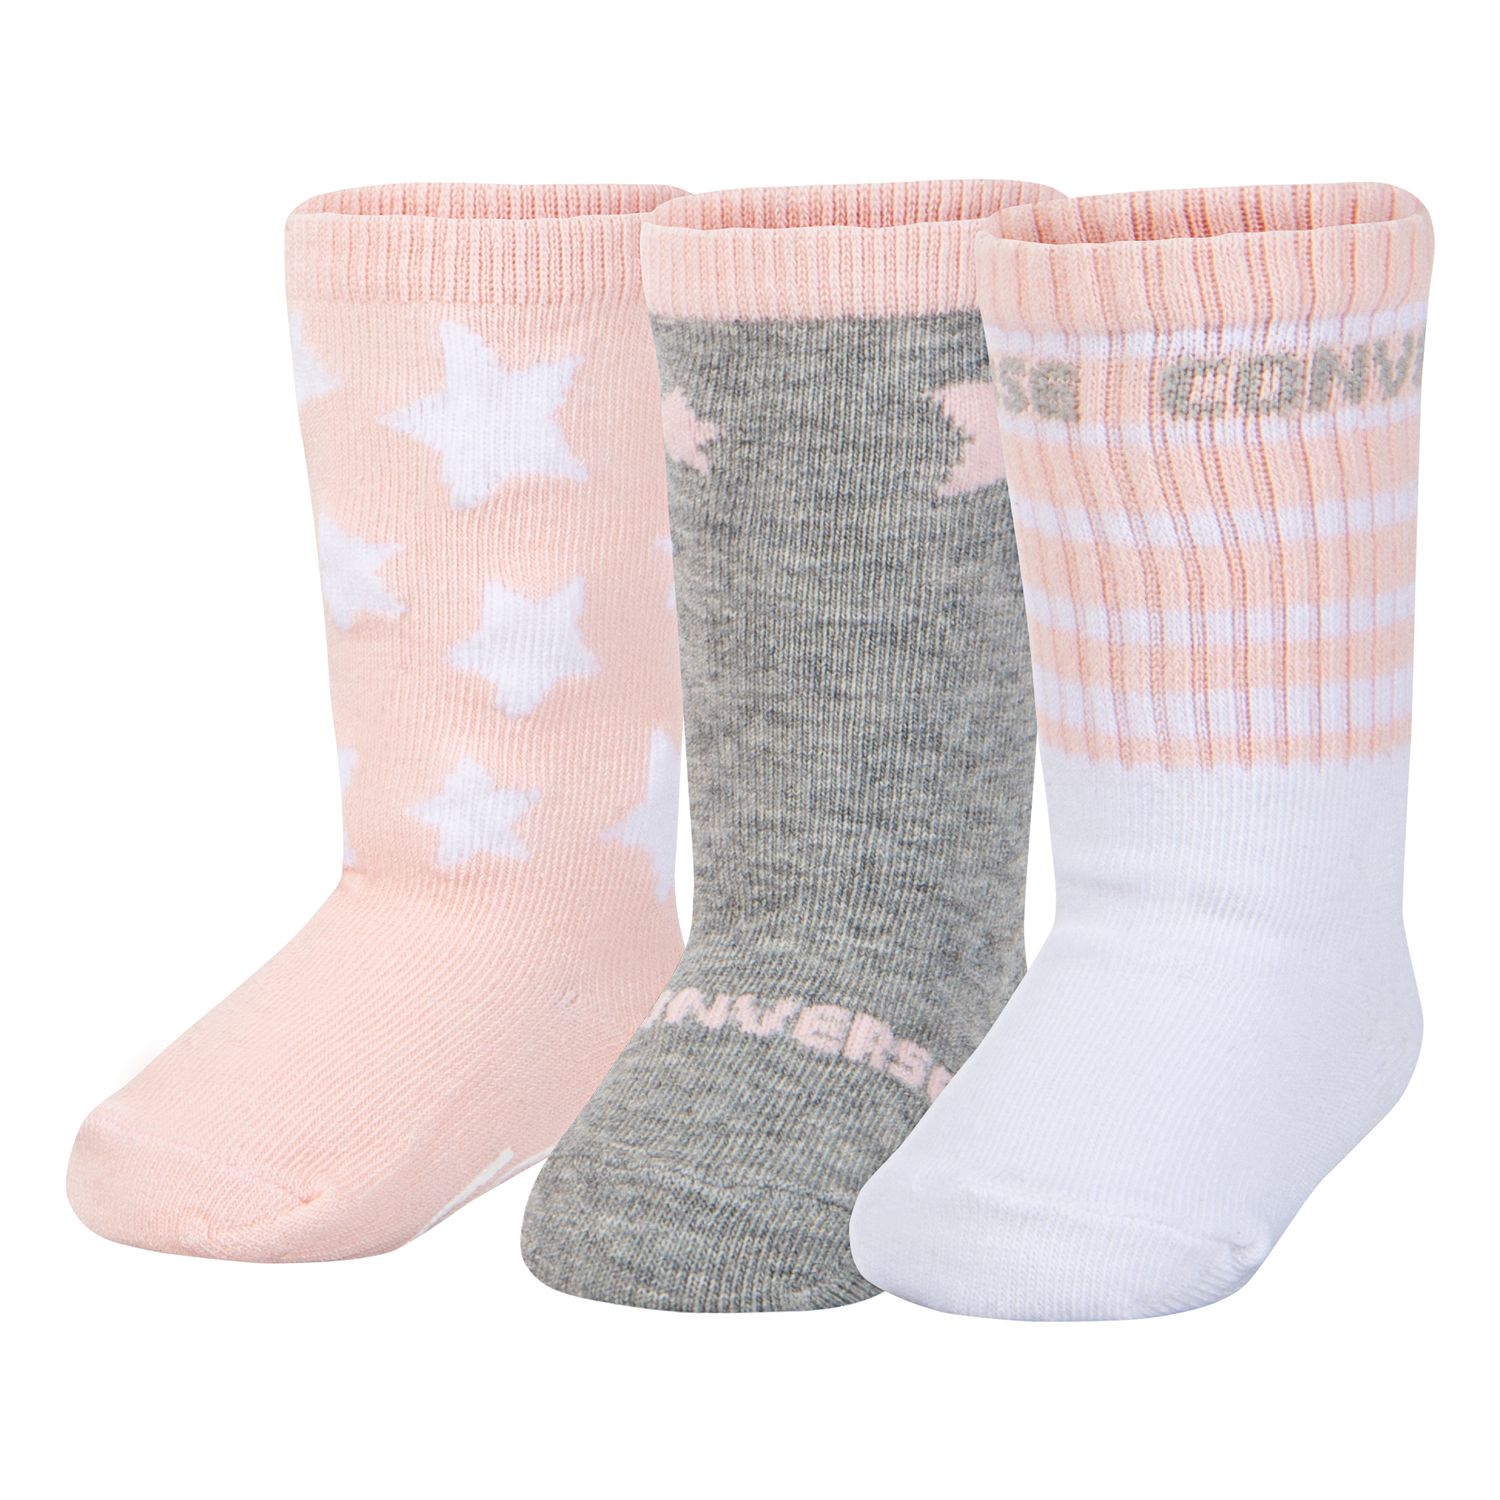 converse baby socks 3 pack